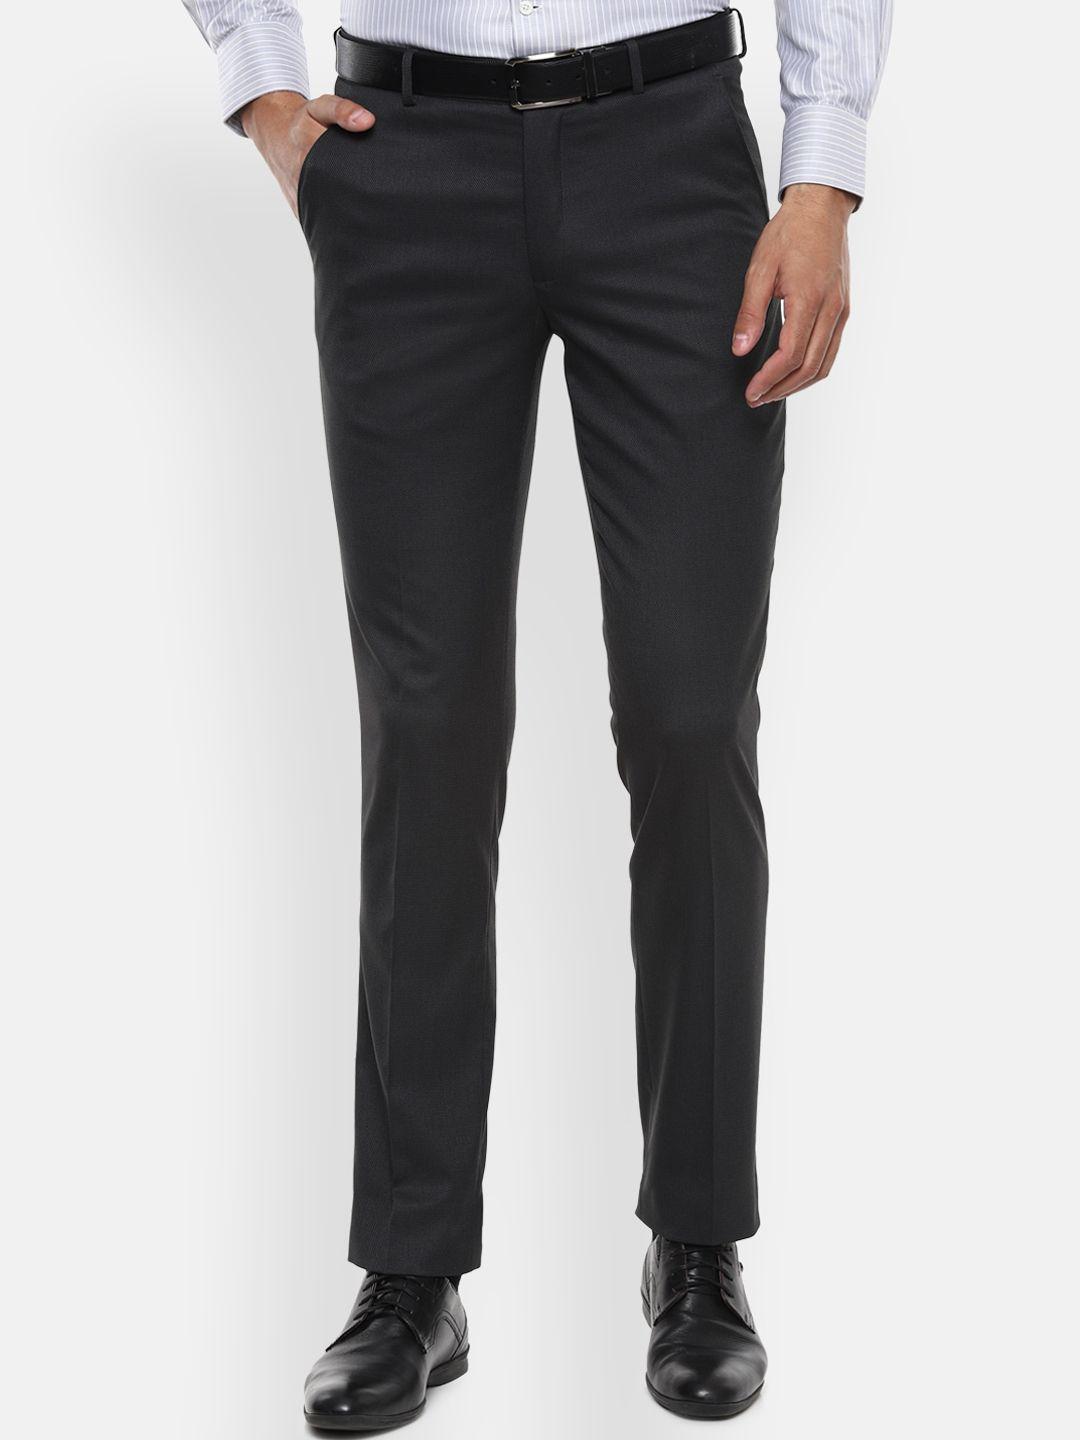 louis-philippe-men-black-slim-fit-solid-formal-trousers